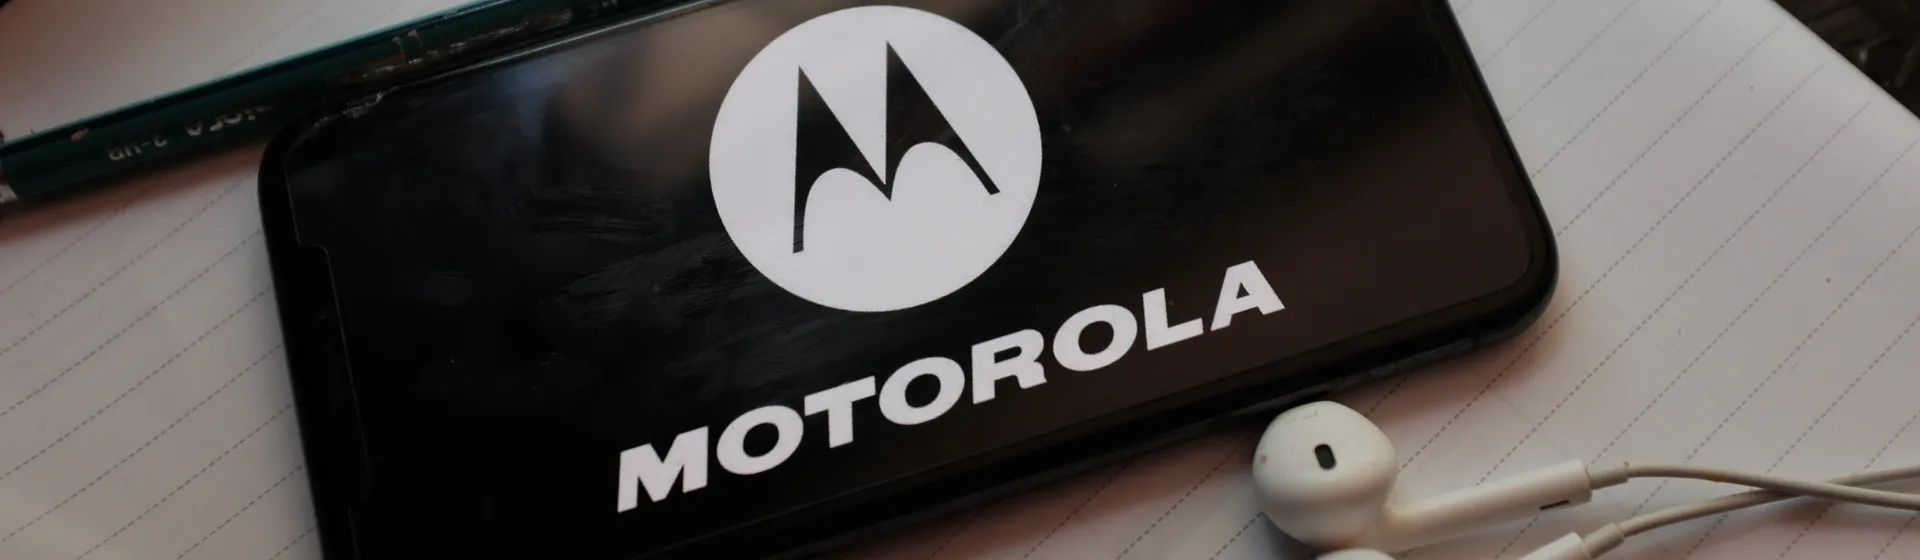 Celular Motorola Cyber Monday: confira nossas apostas